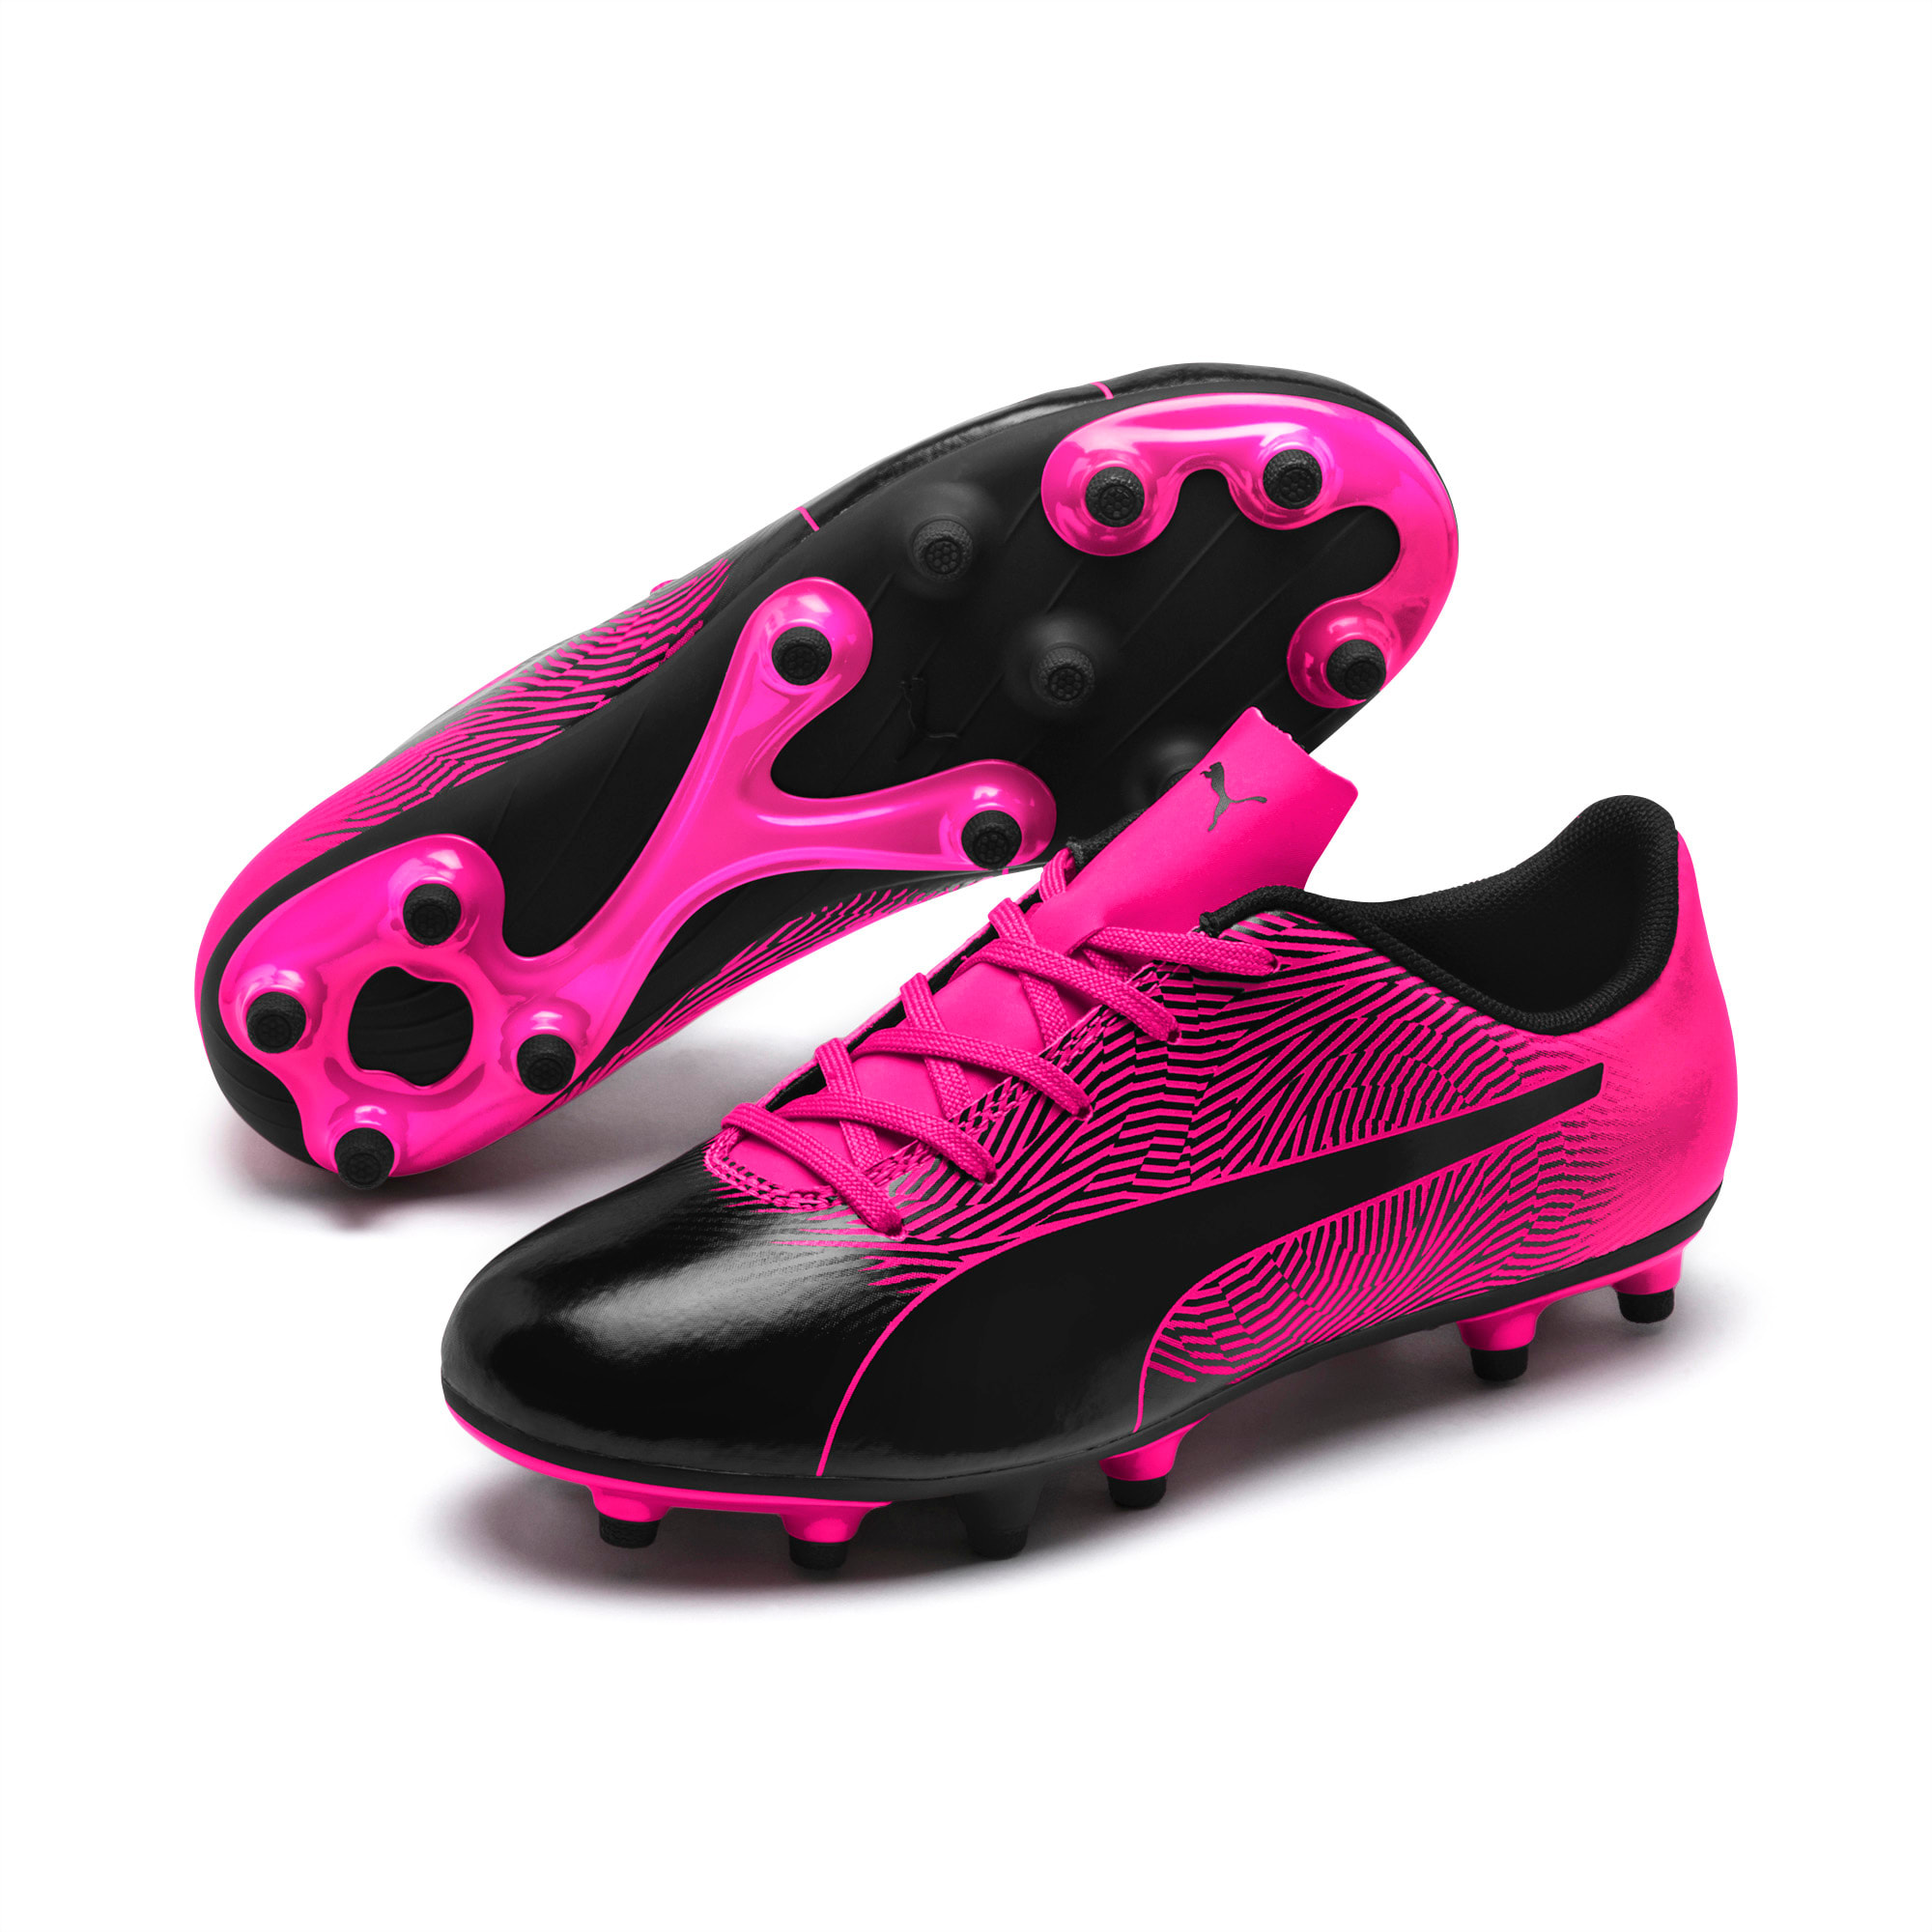 pink puma soccer cleats